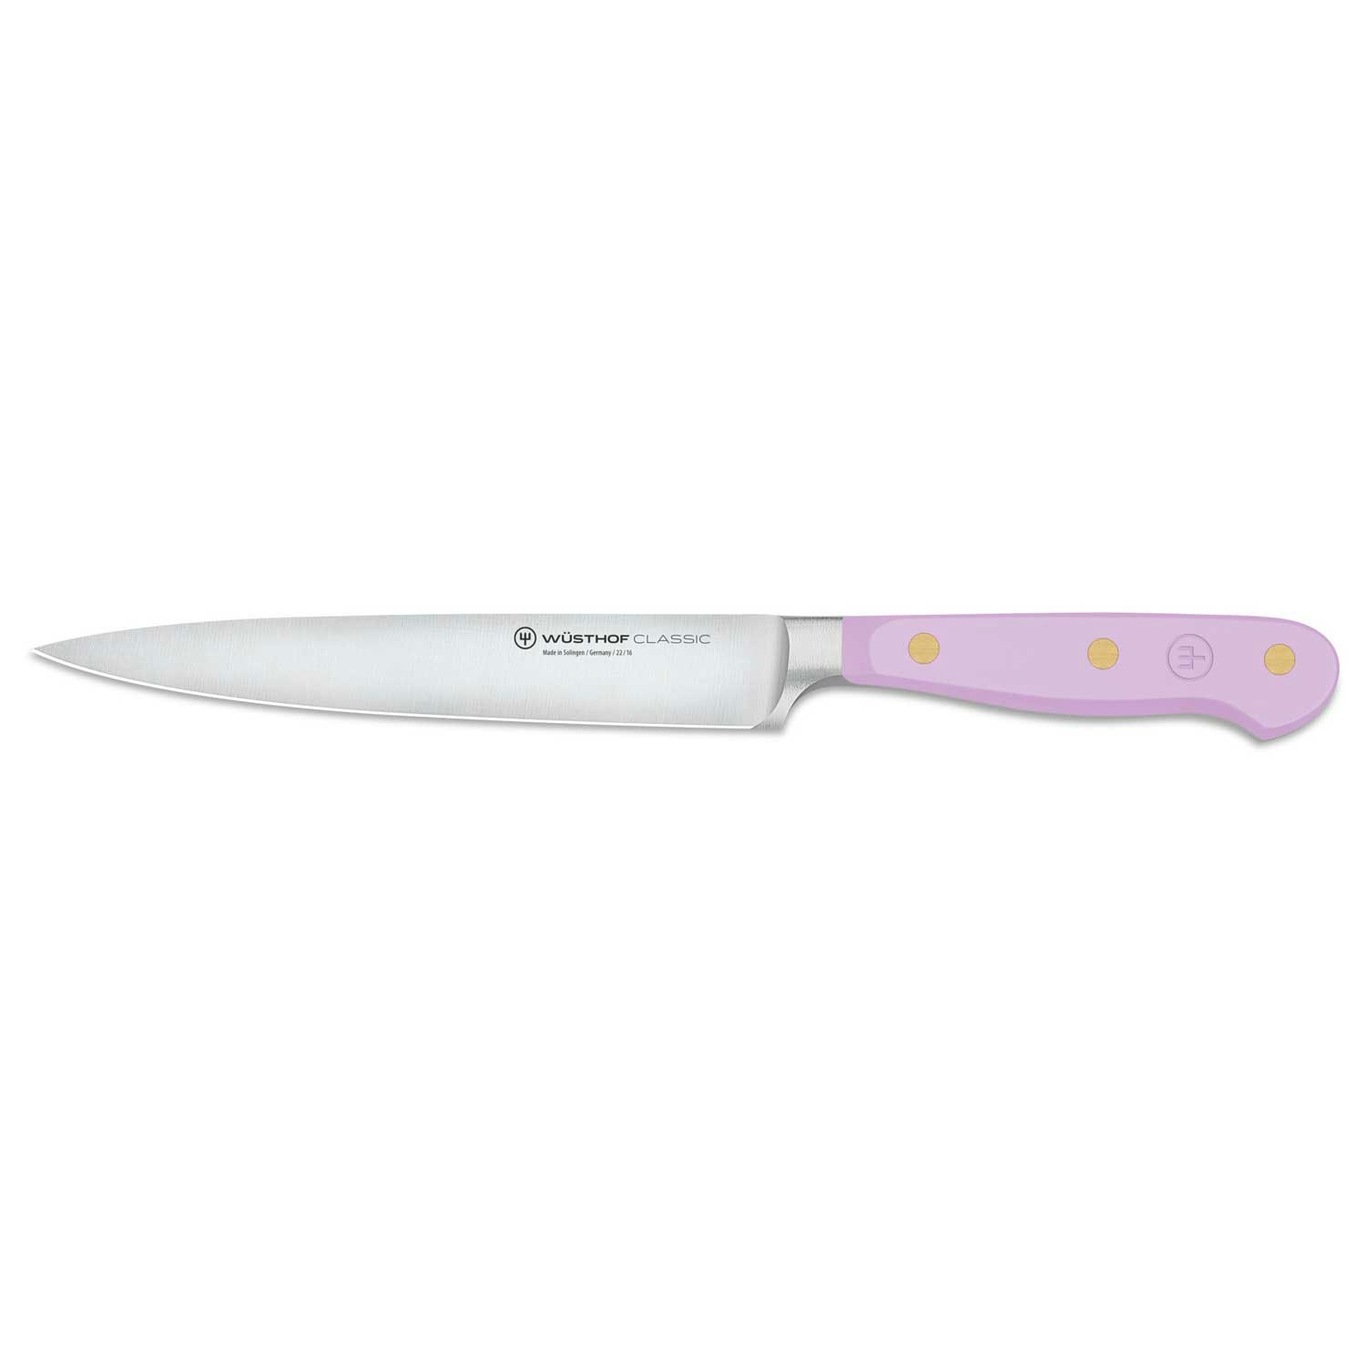 https://royaldesign.com/image/2/wusthof-classic-colour-utility-knife-16-cm-6?w=800&quality=80